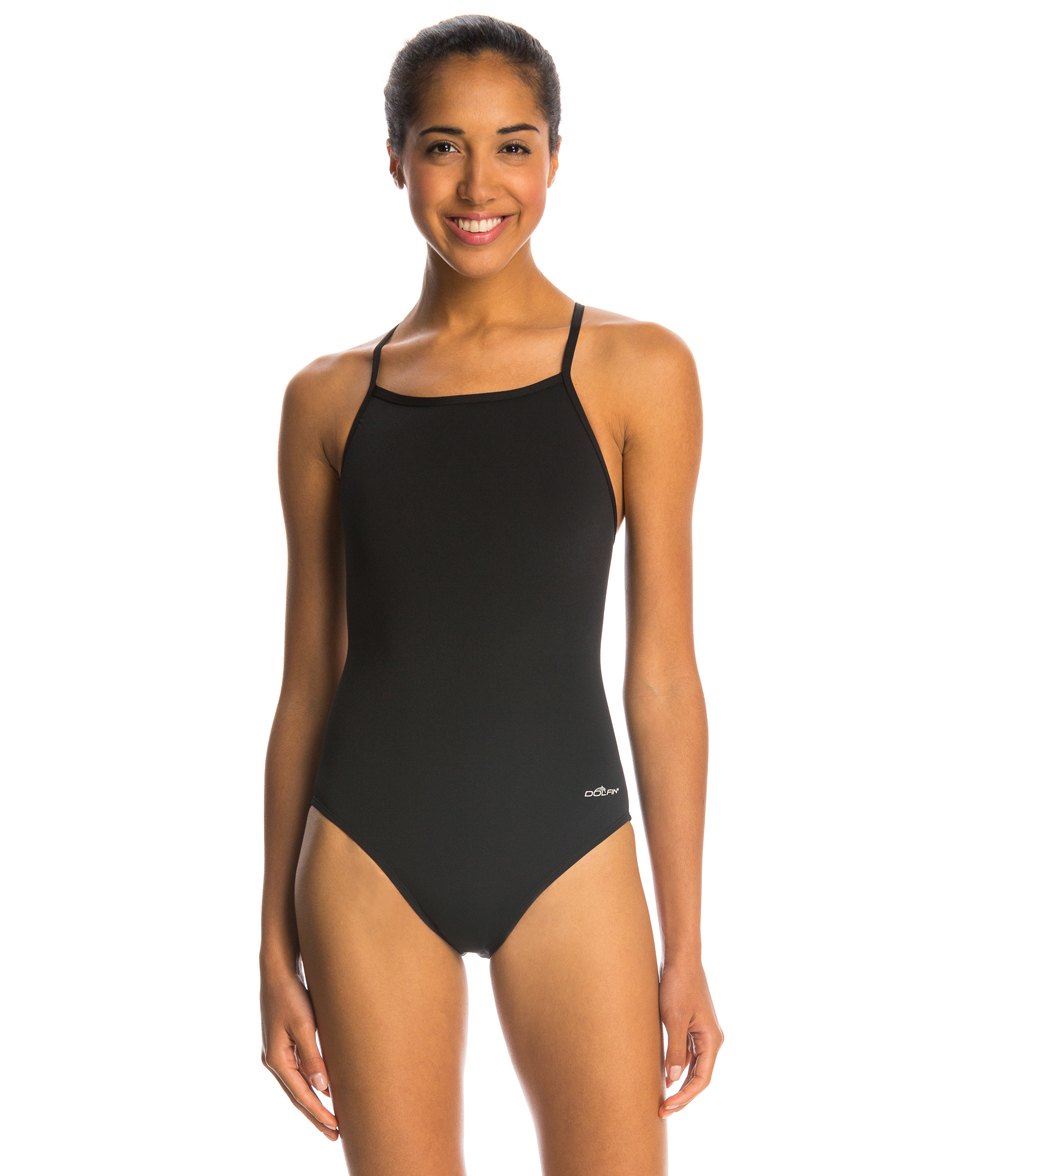 Dolfin Reliance Solid V-Back One Piece Swimsuit - Black 26 - Swimoutlet.com